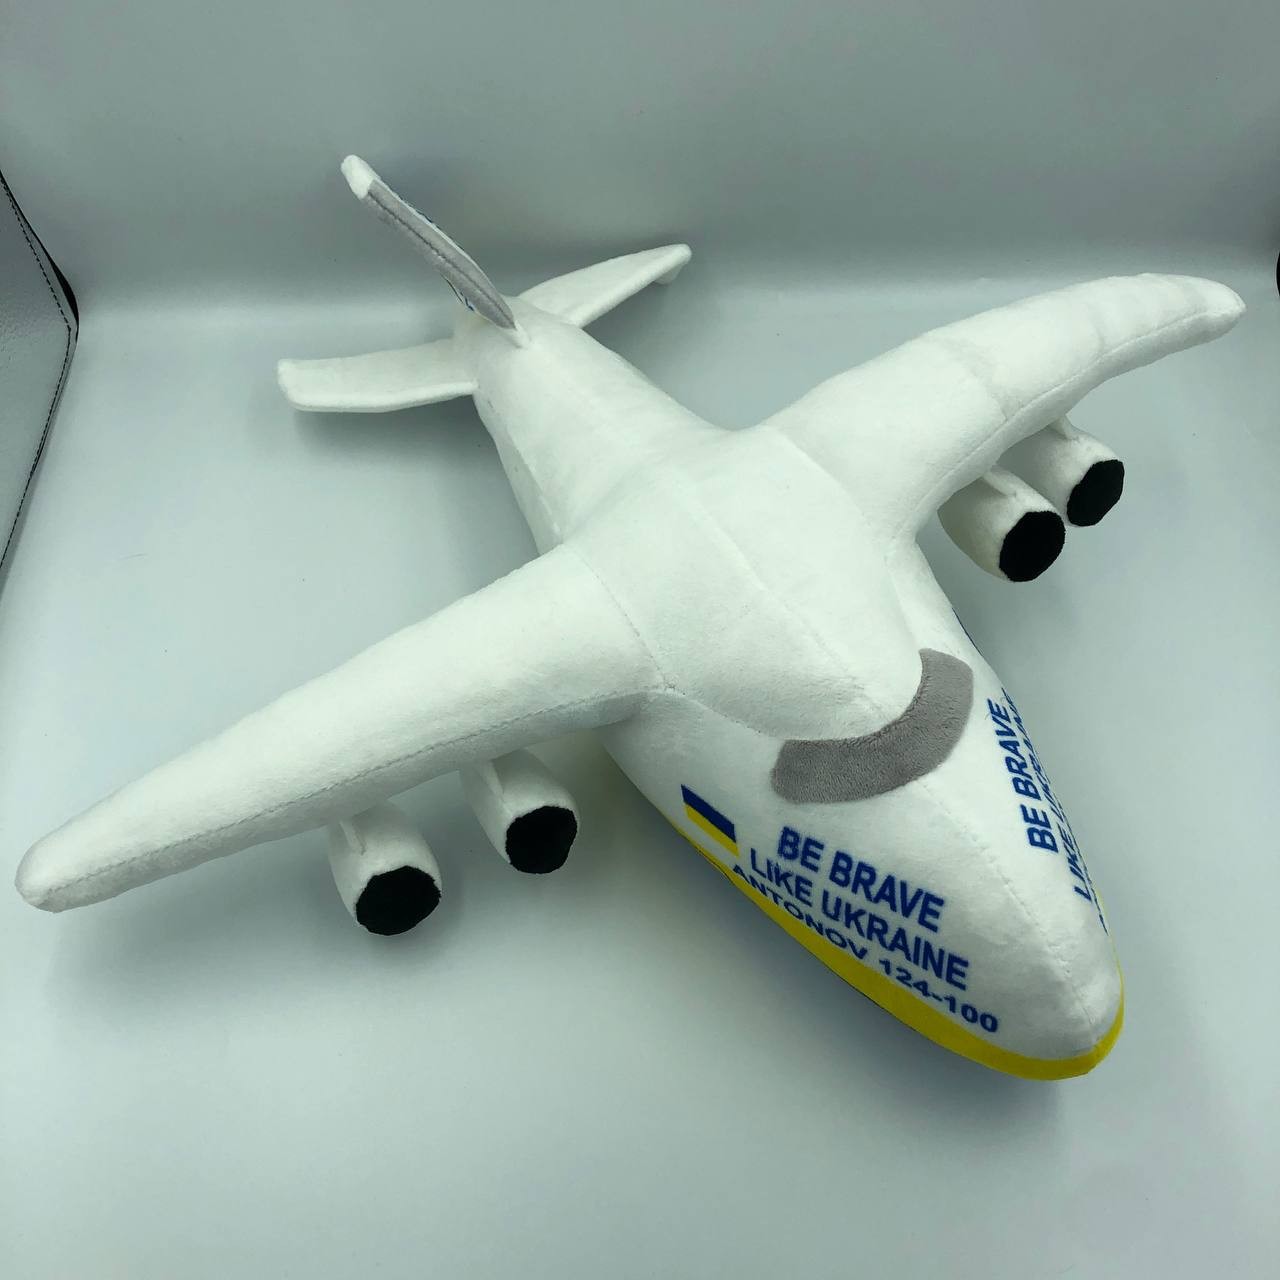 Plane Antonov 124 “Be brave like Ukraine” is an exclusive soft plush toy. 17" (45 cm)